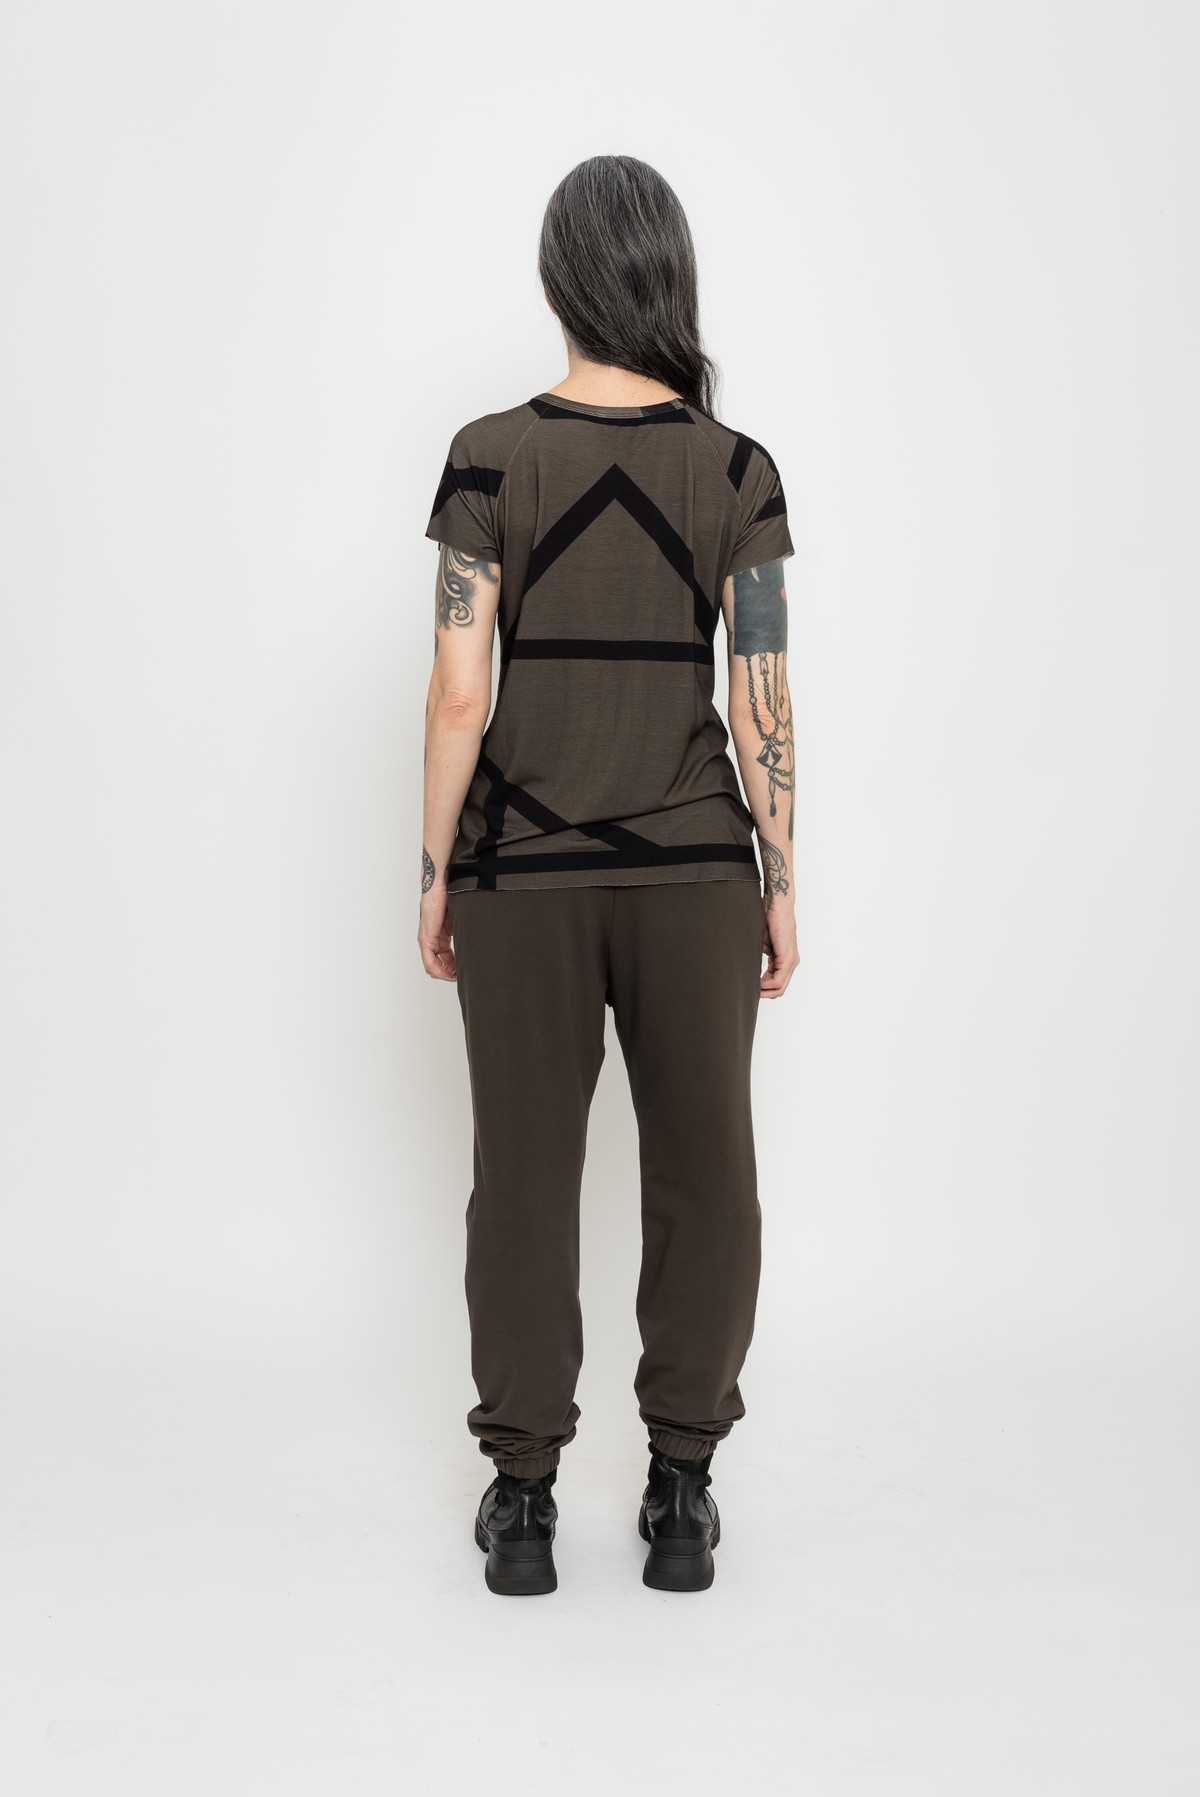 camiseta com estampa geométrica | geometric print t-shirt